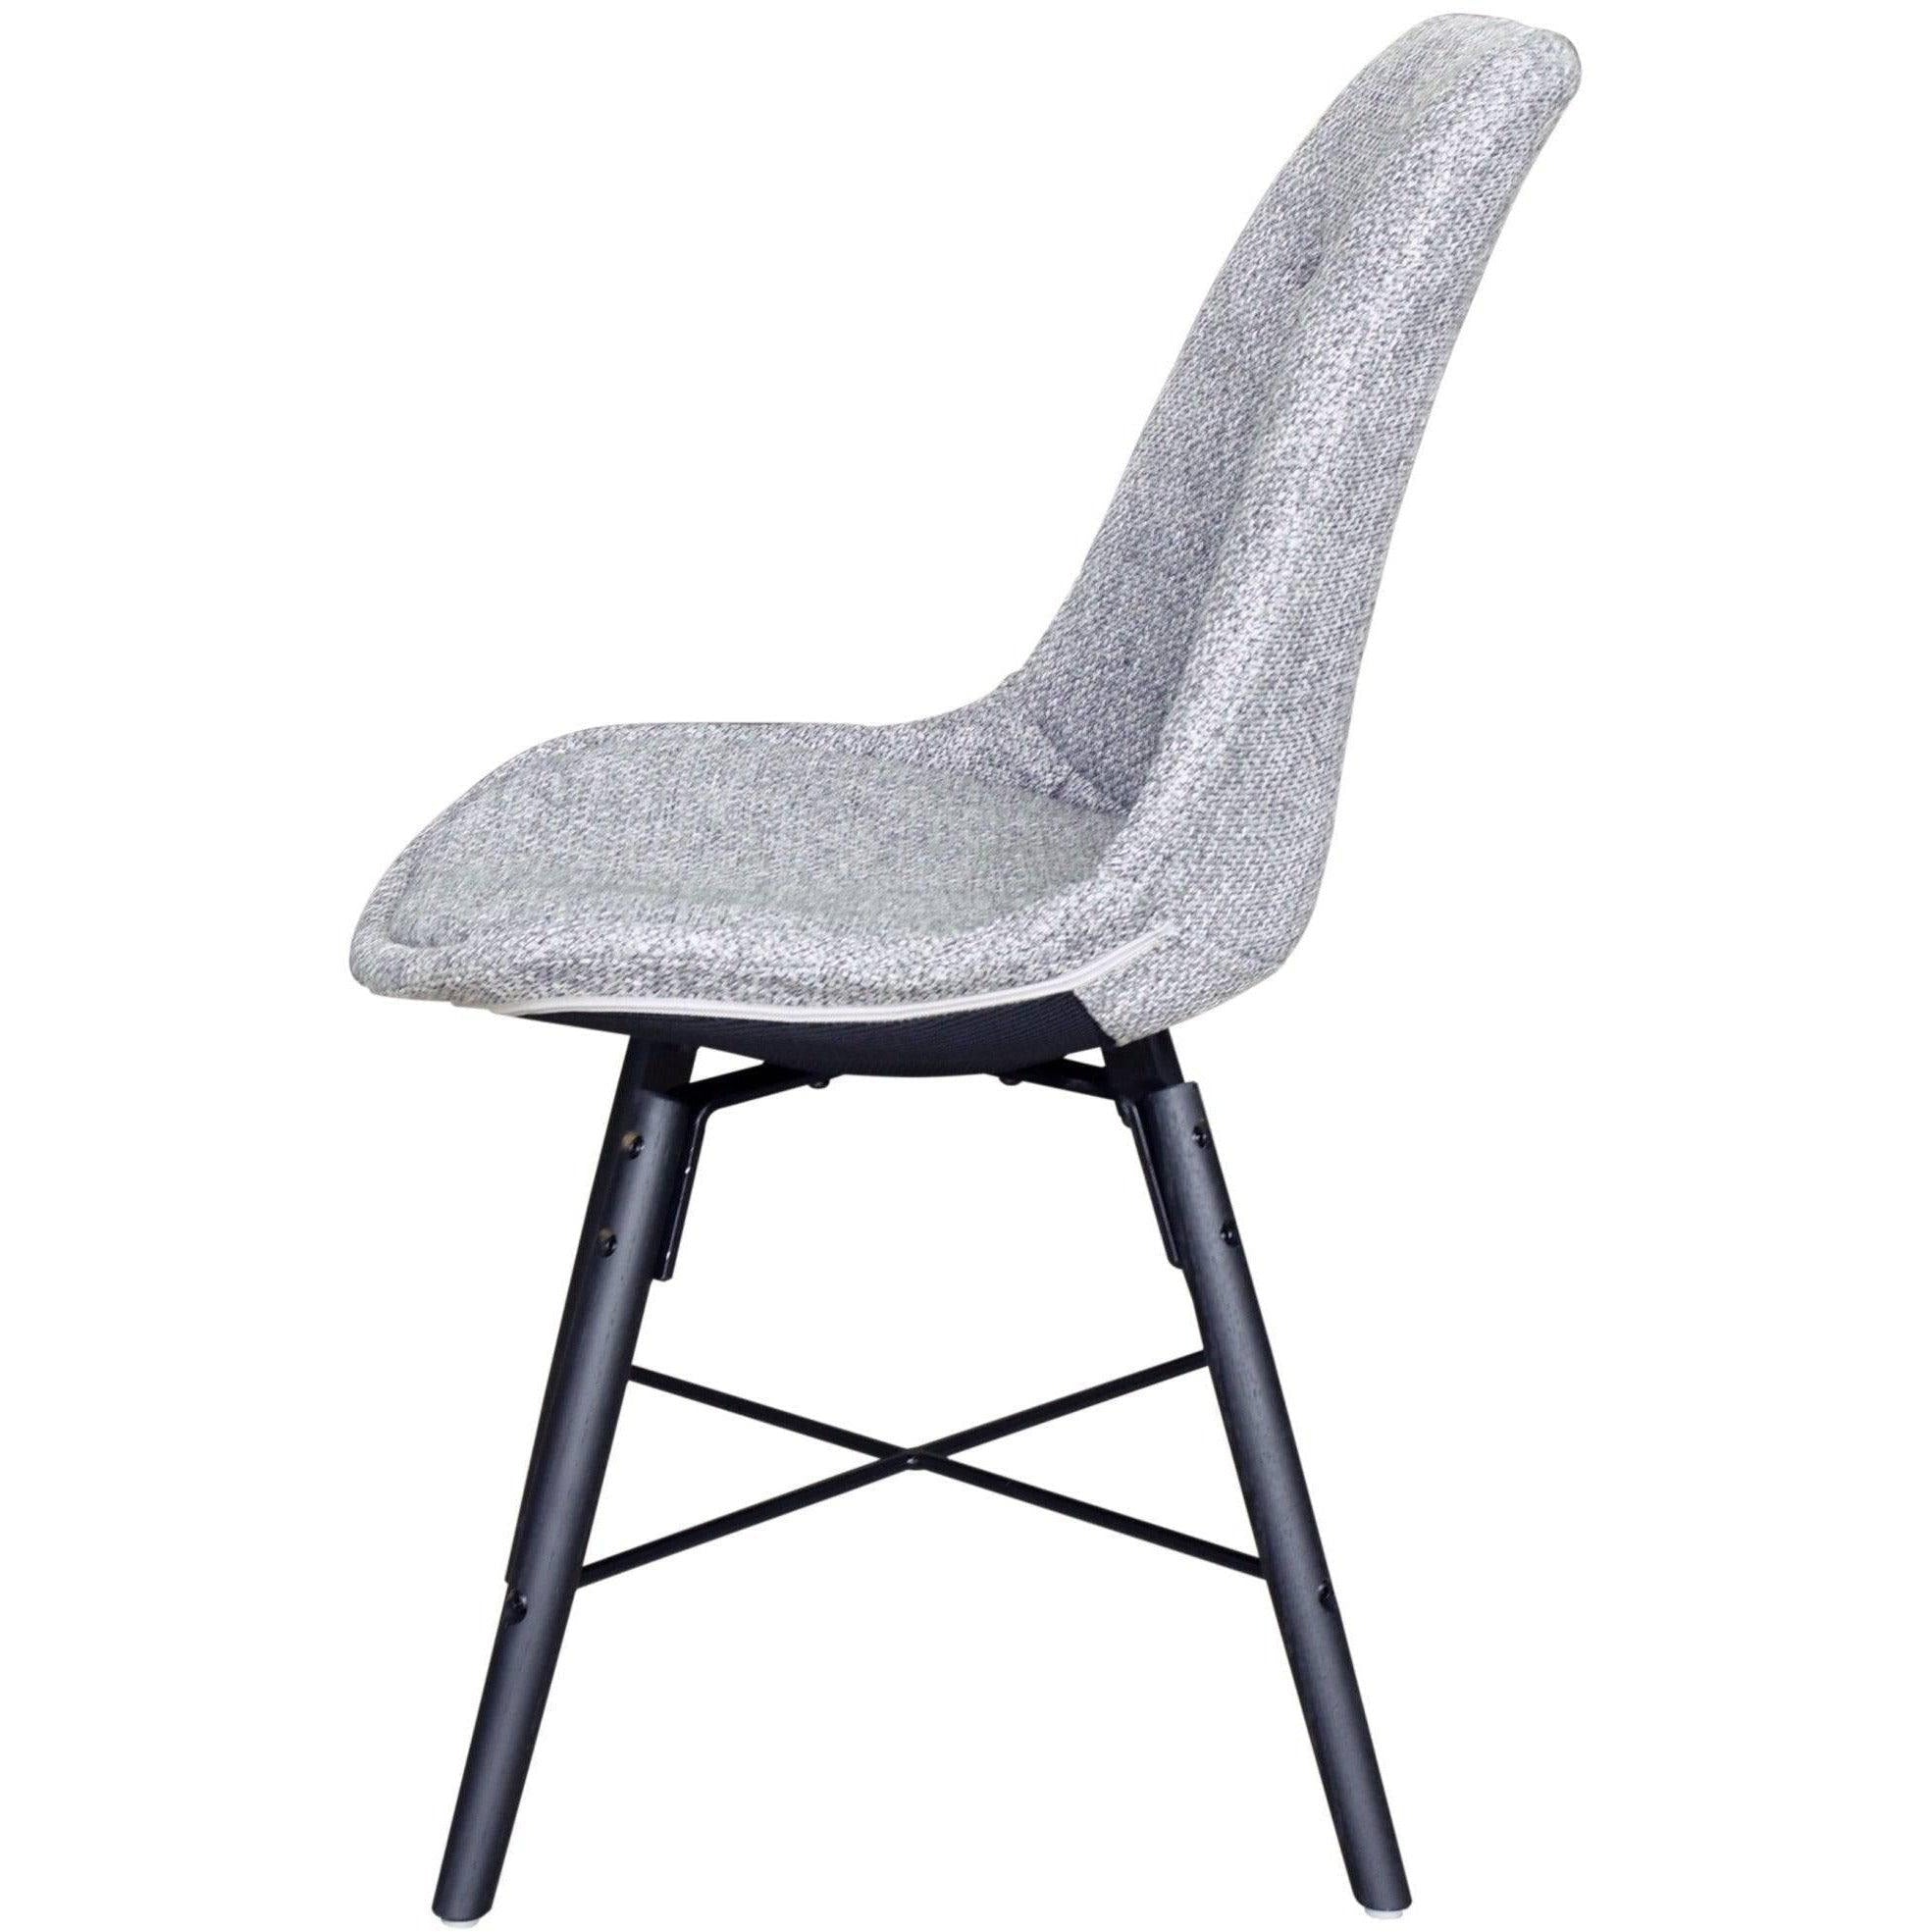 Design chair FORU - デザイナーズチェア - 4937294130150 - 5